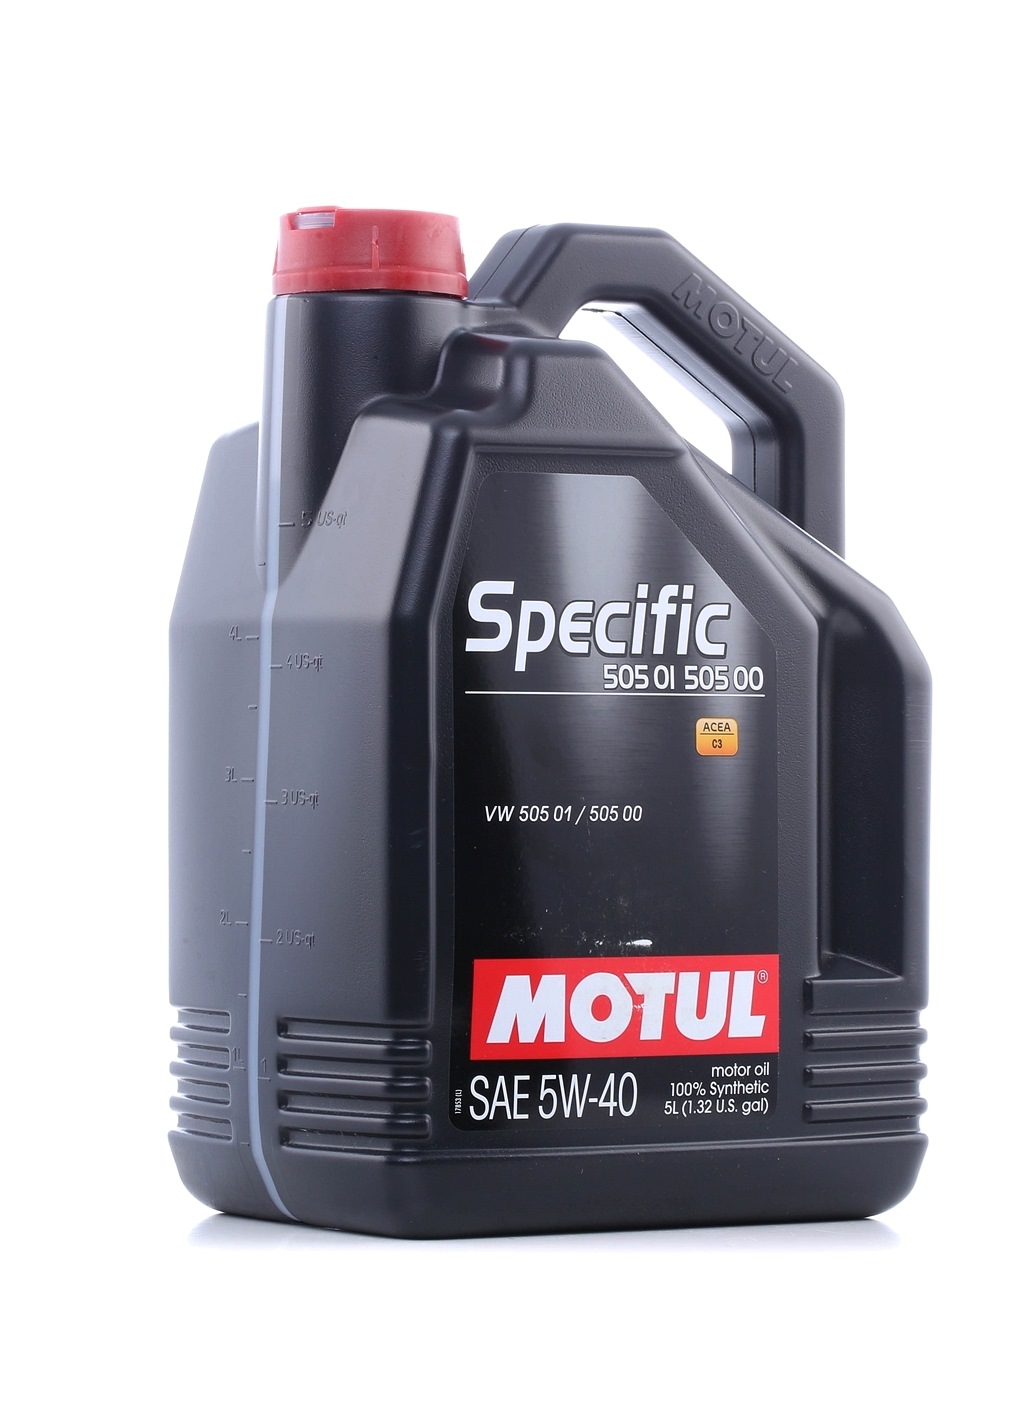 Kaufen KFZ Motoröl MOTUL 101575 SPECIFIC, 505 01 505 00 5W-40, 5l, Synthetiköl